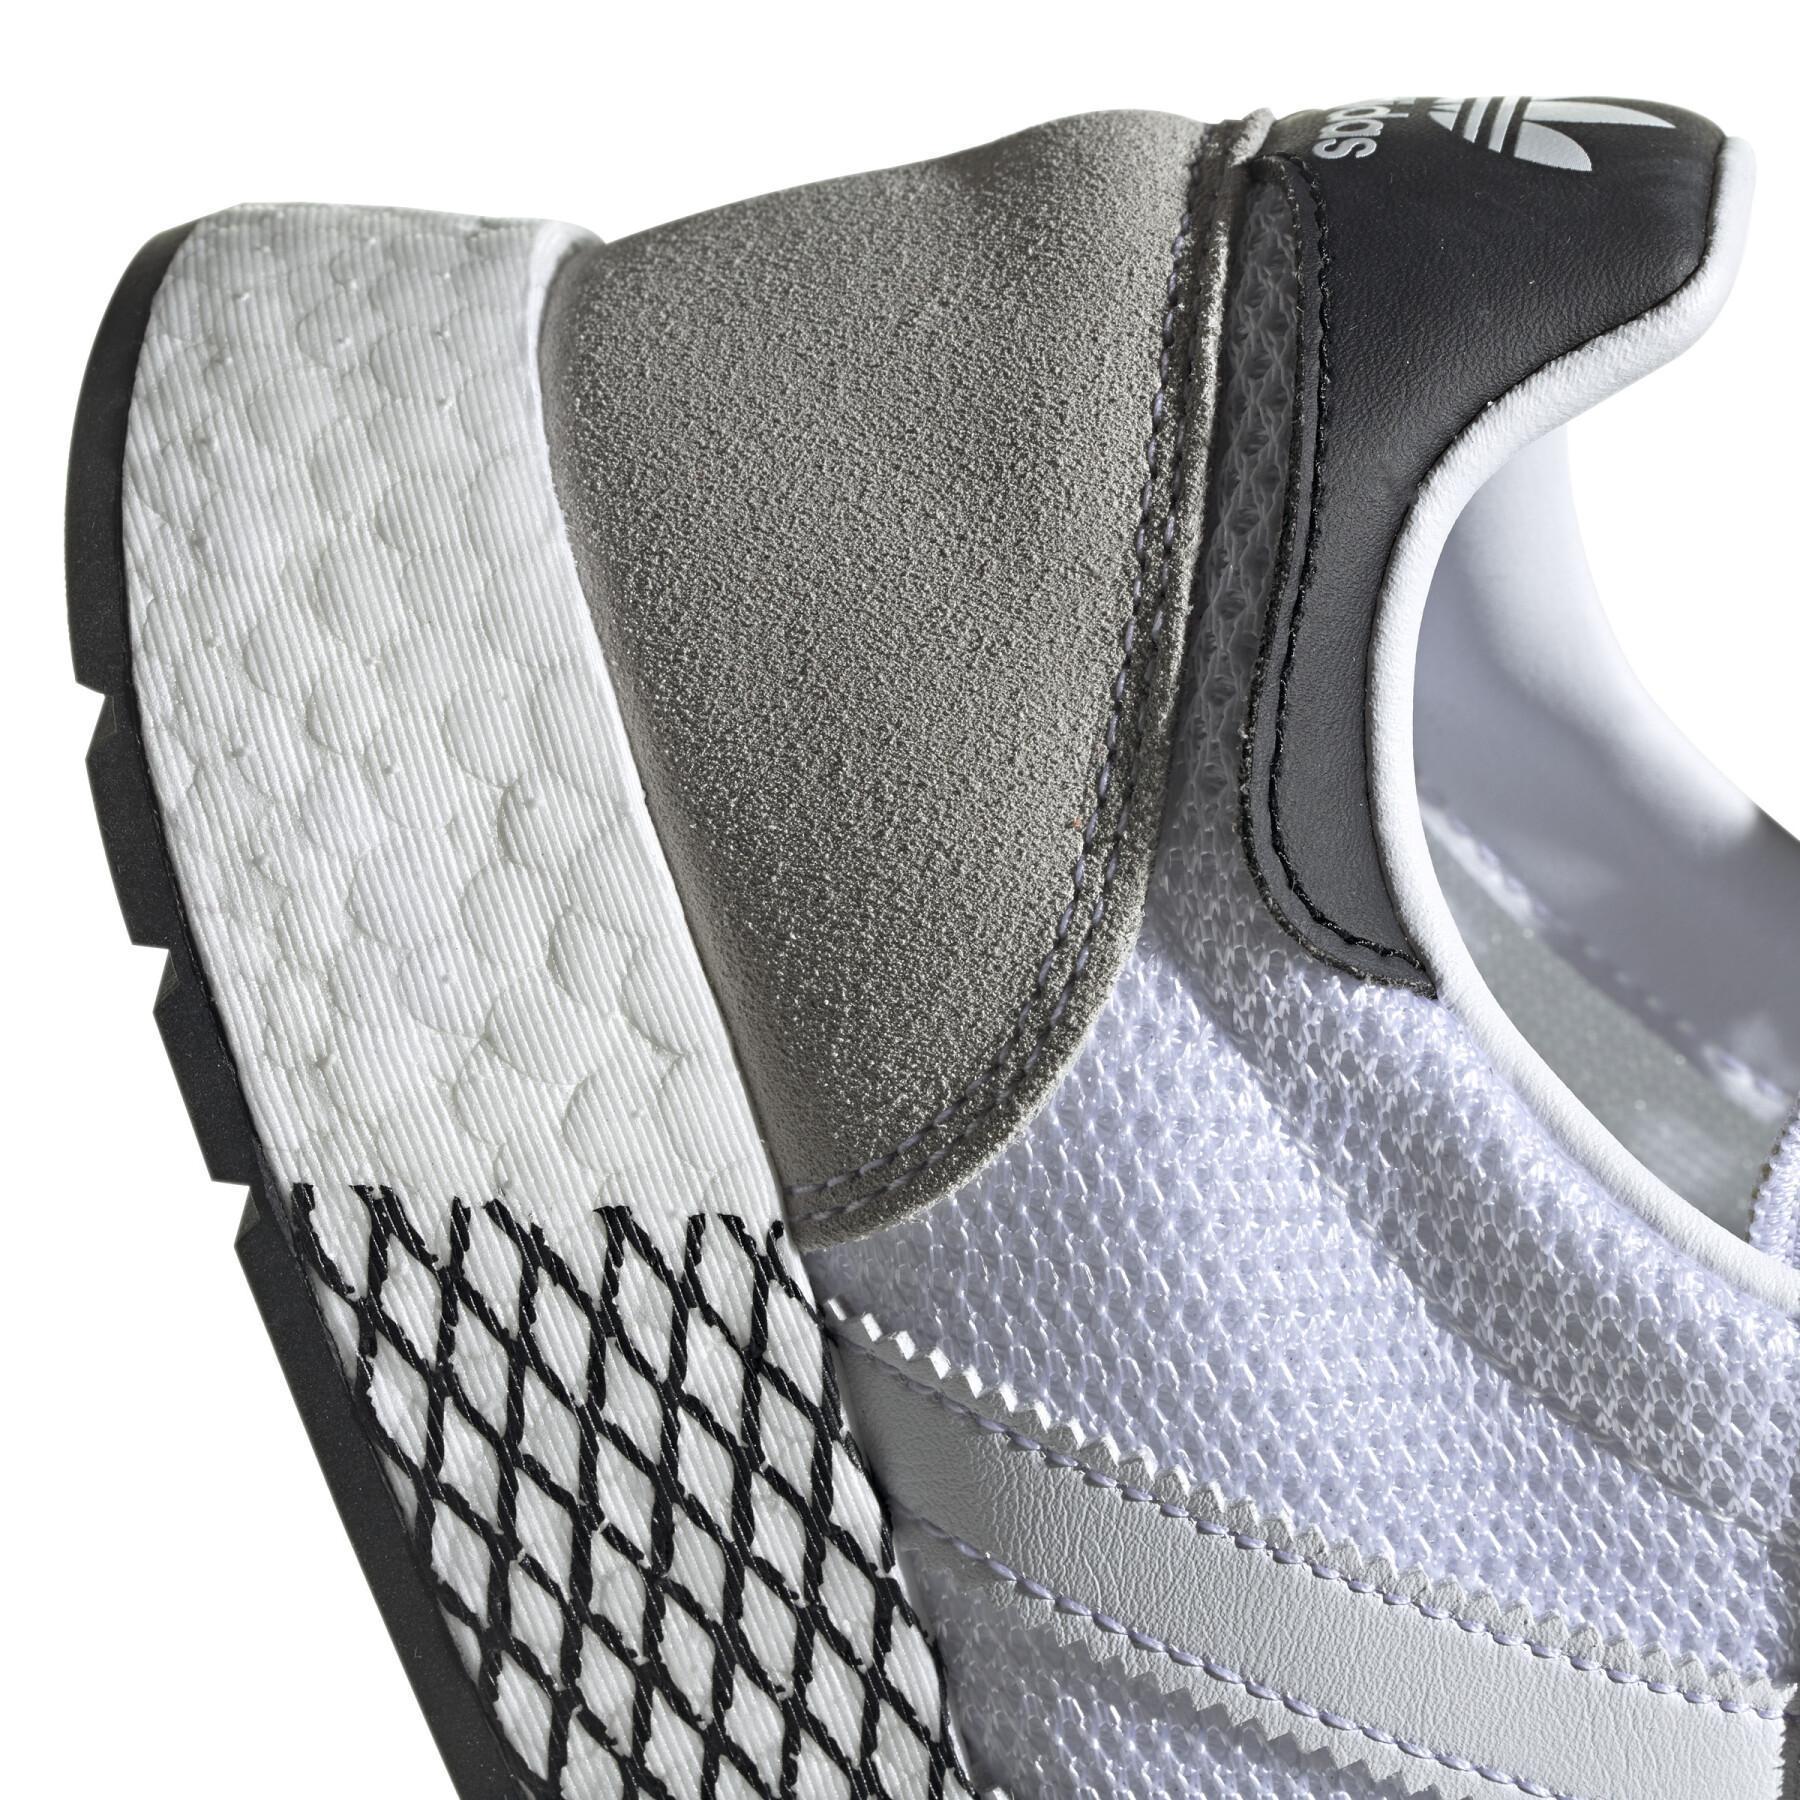 Sneakers adidas Originals Marathon Tech